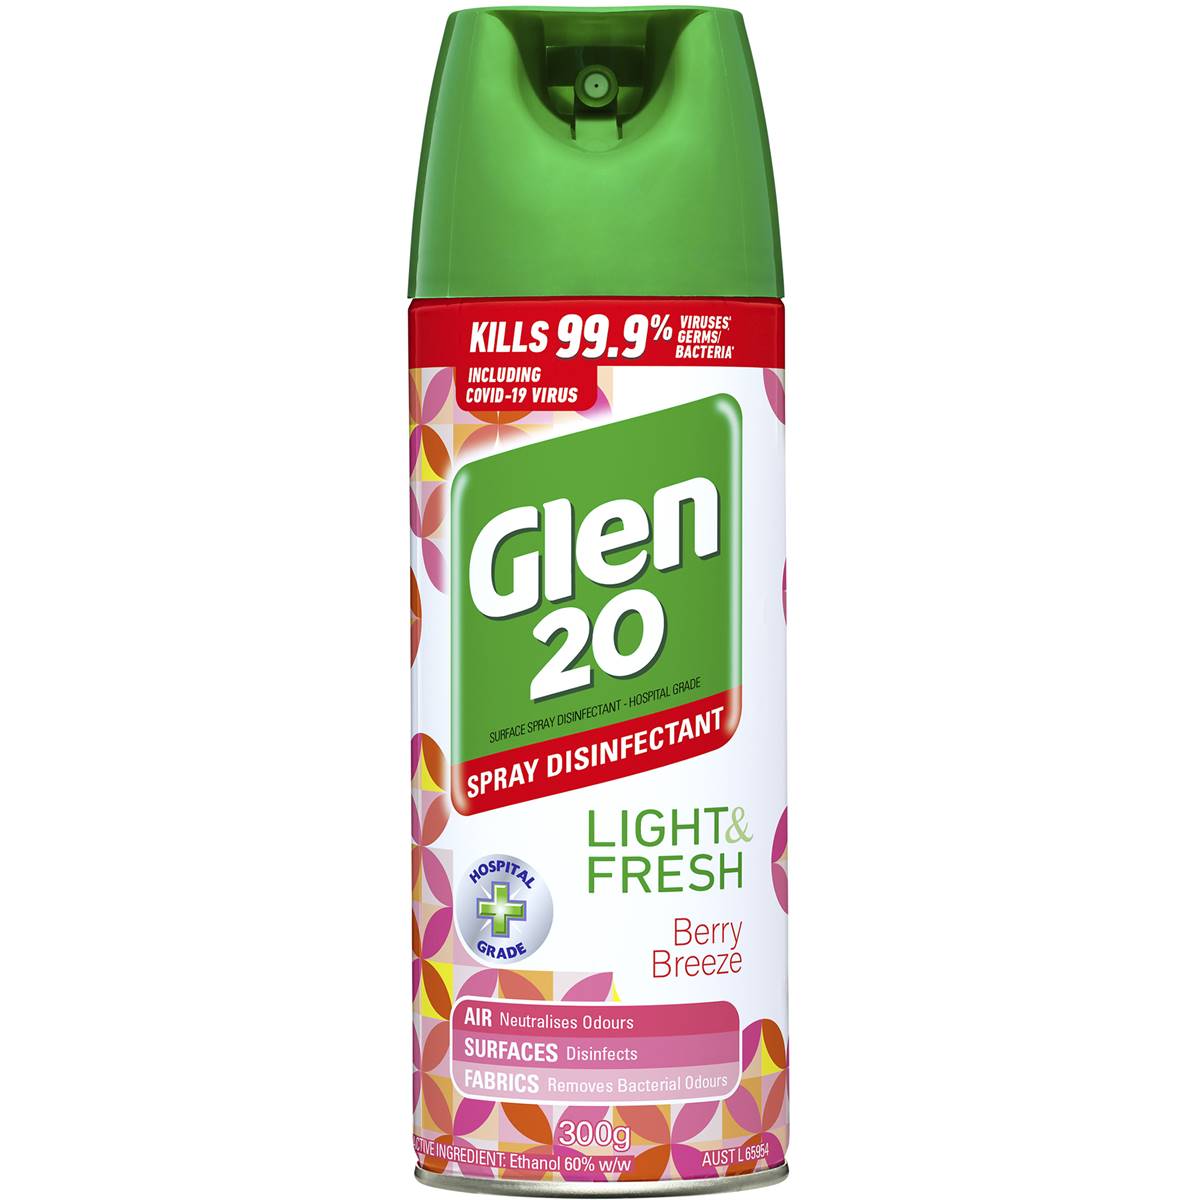 Glen 20 Spray Disinfectant Berry Breeze 300g